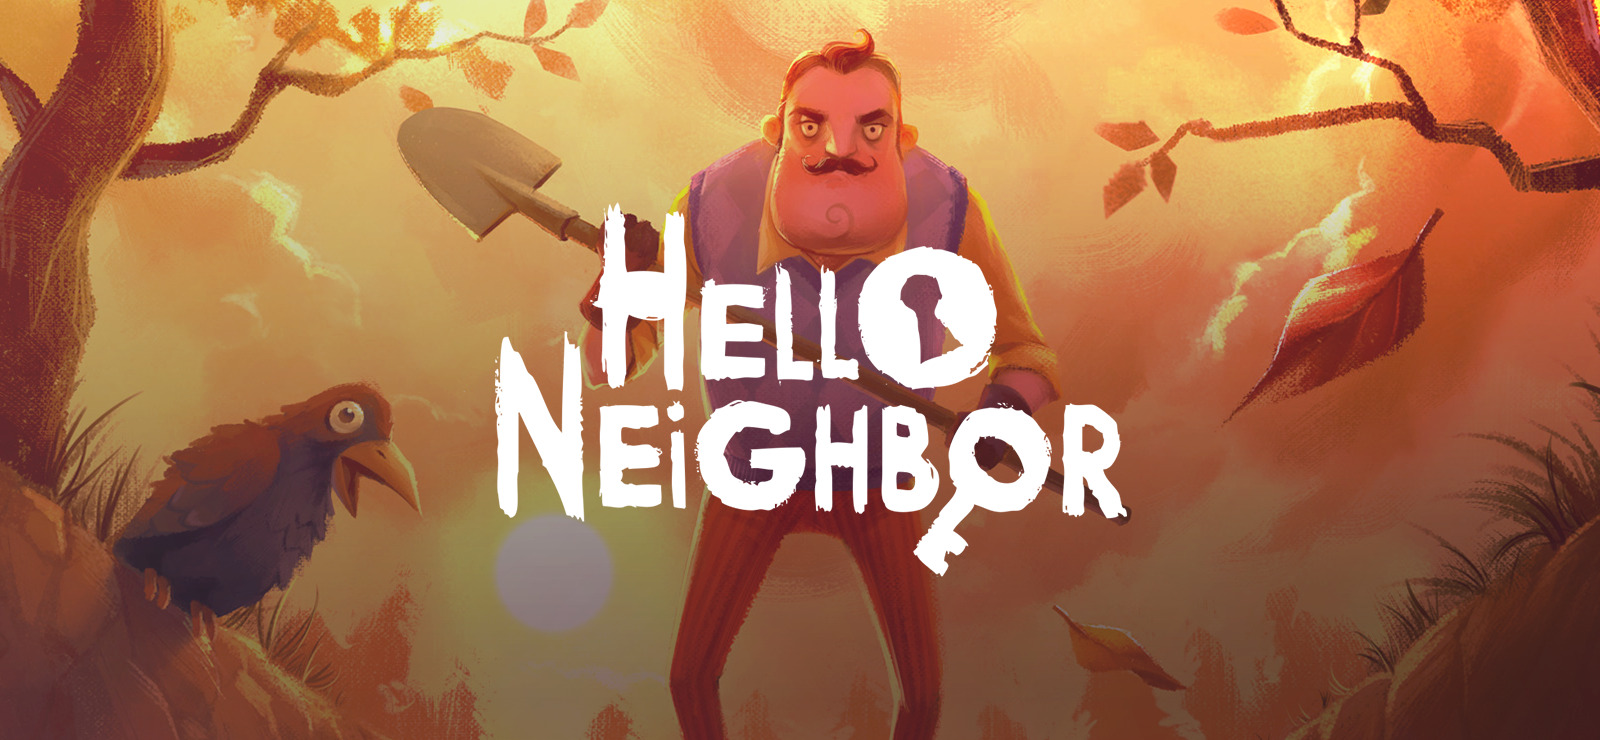 hello neighbor alpha 4 free download zip file